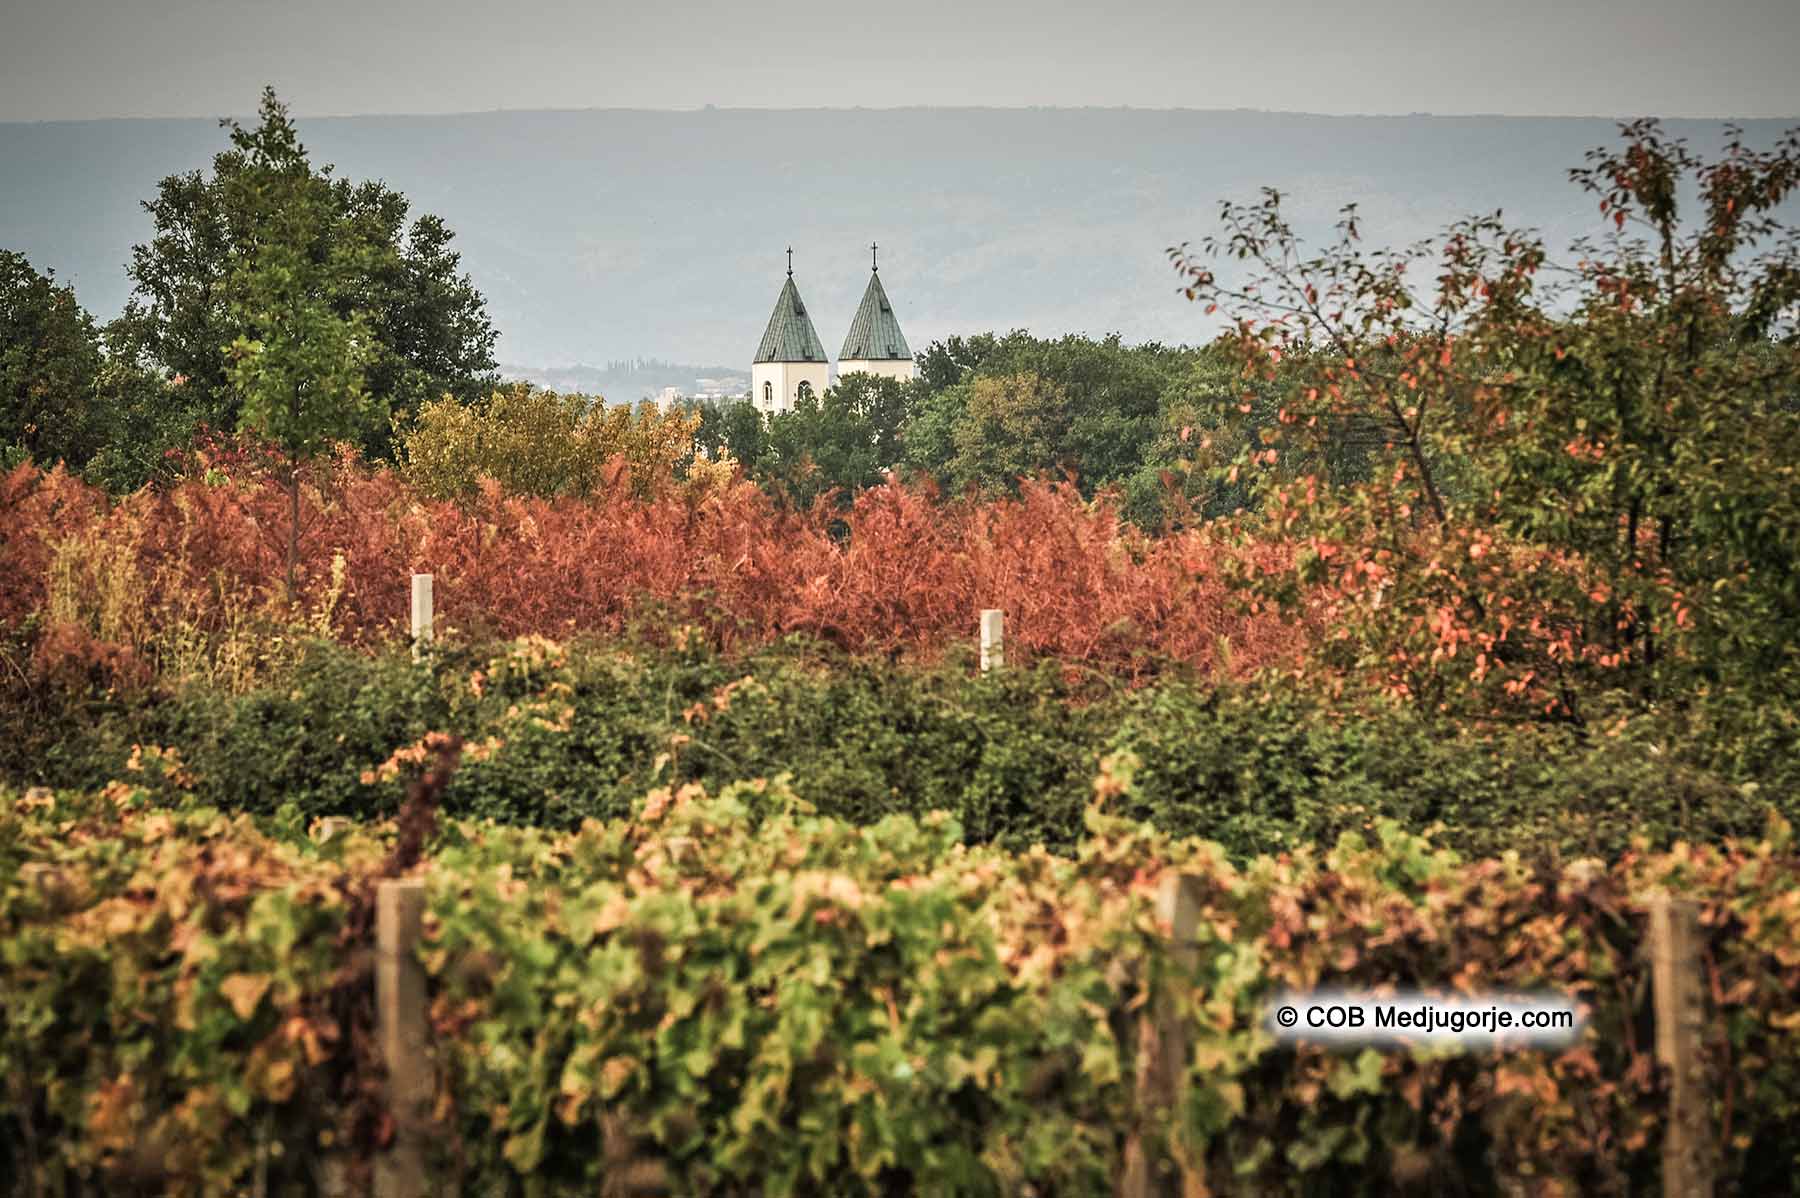 October 22, 2017, Medjugorje. Vineyards in Medjugorje, as they begin to die off for the season